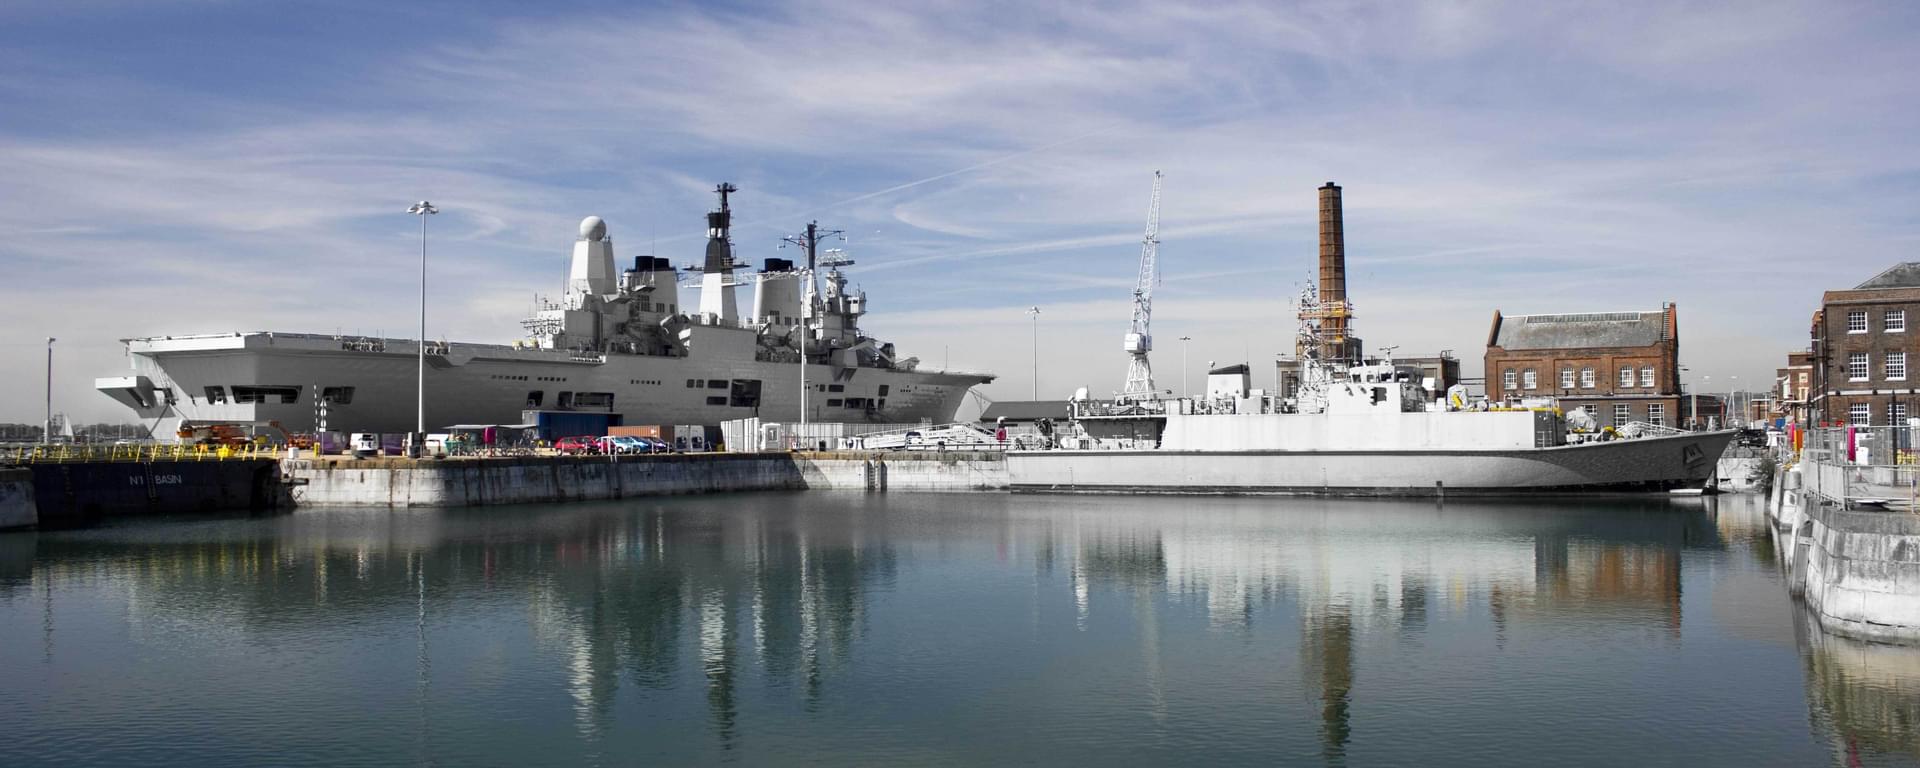 HMS Ark Royal Reflections